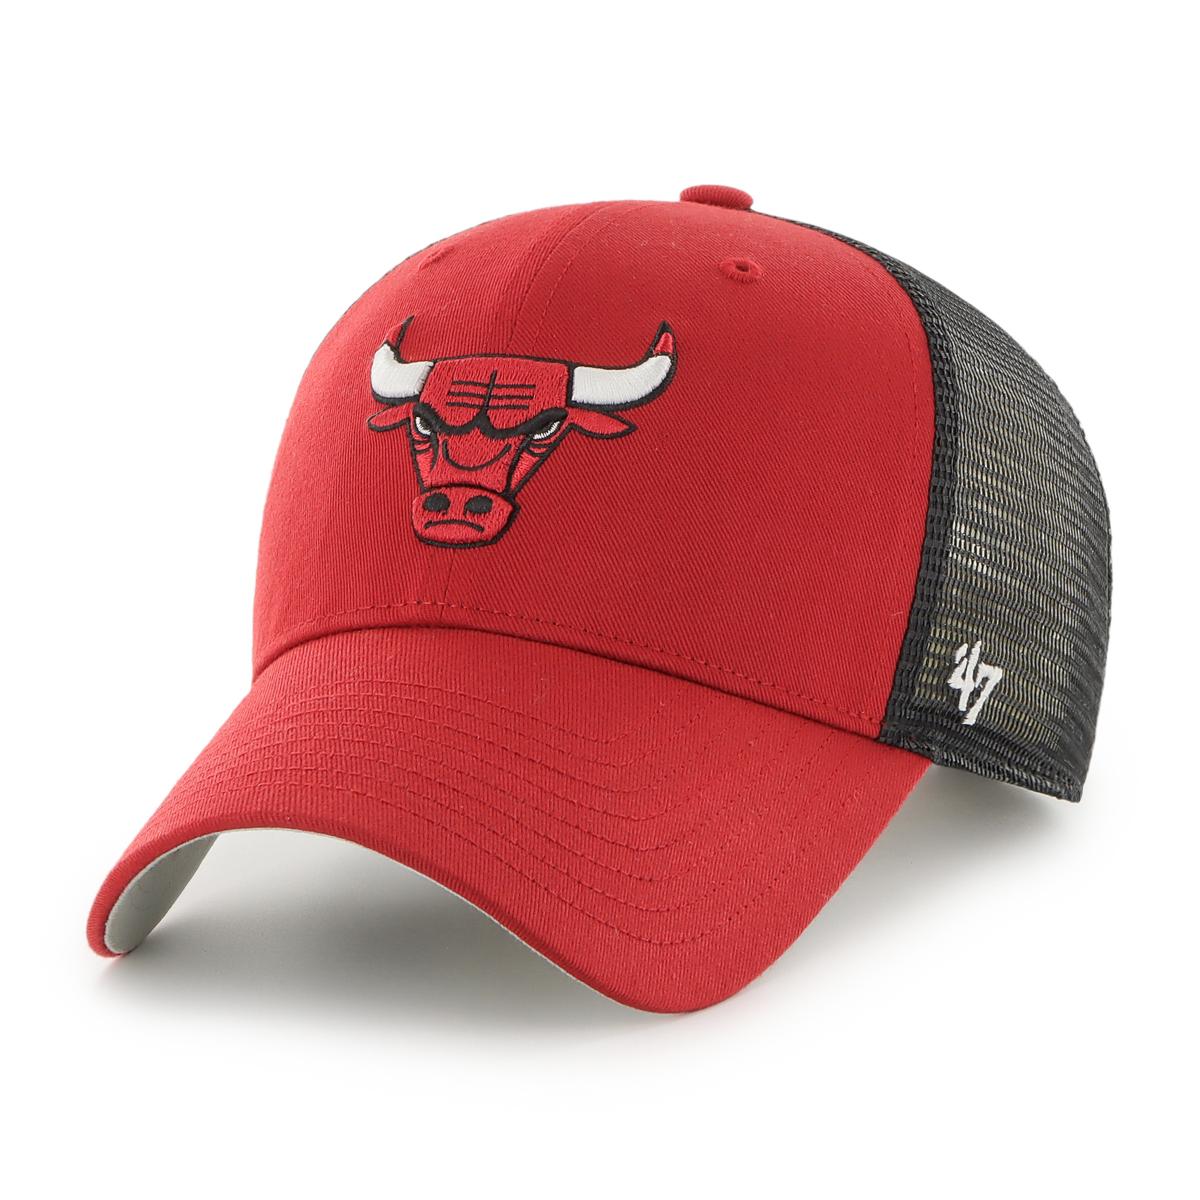 Gorra 47 Brand Chicago Bulls Original Ajustable NBA